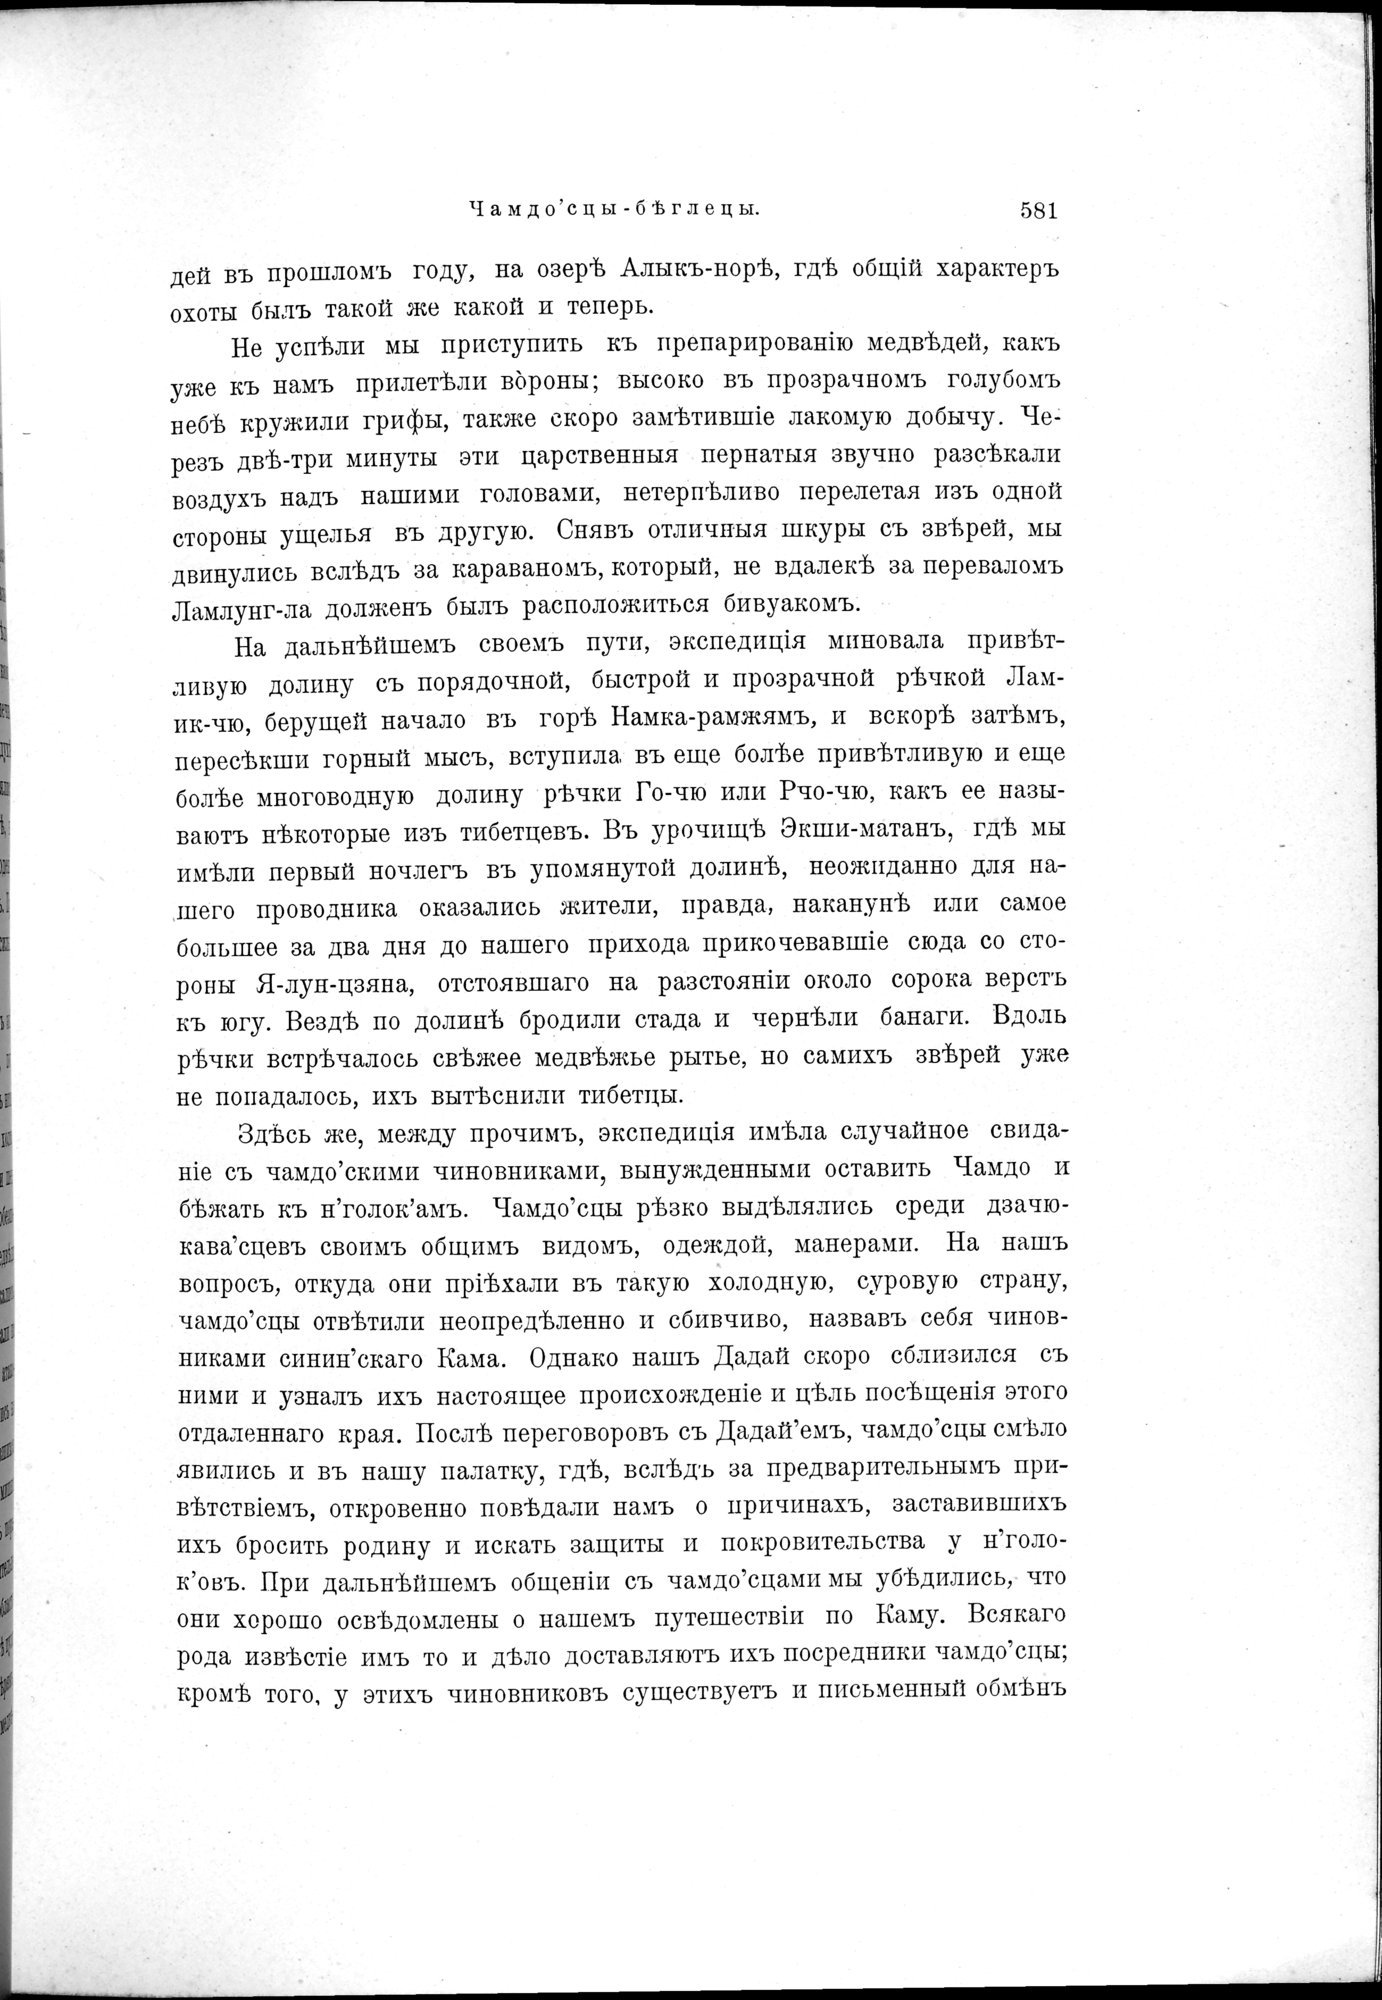 Mongoliia i Kam : vol.2 / Page 405 (Grayscale High Resolution Image)